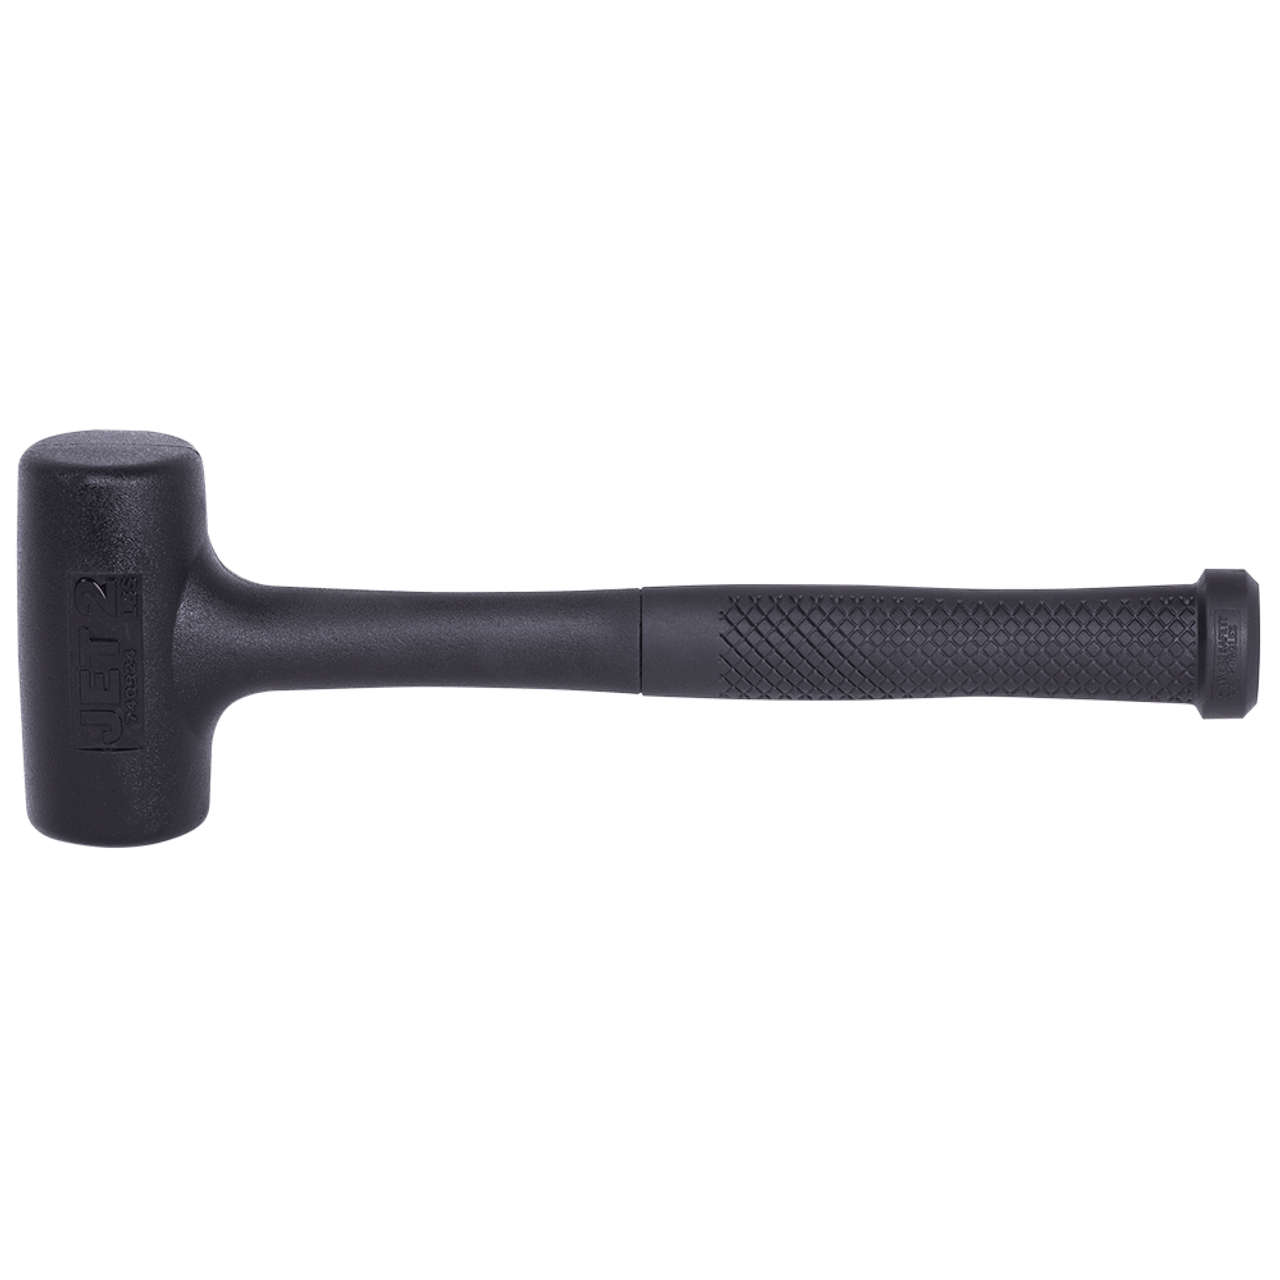 1 lb. Dead Blow Sledge Hammer 740921